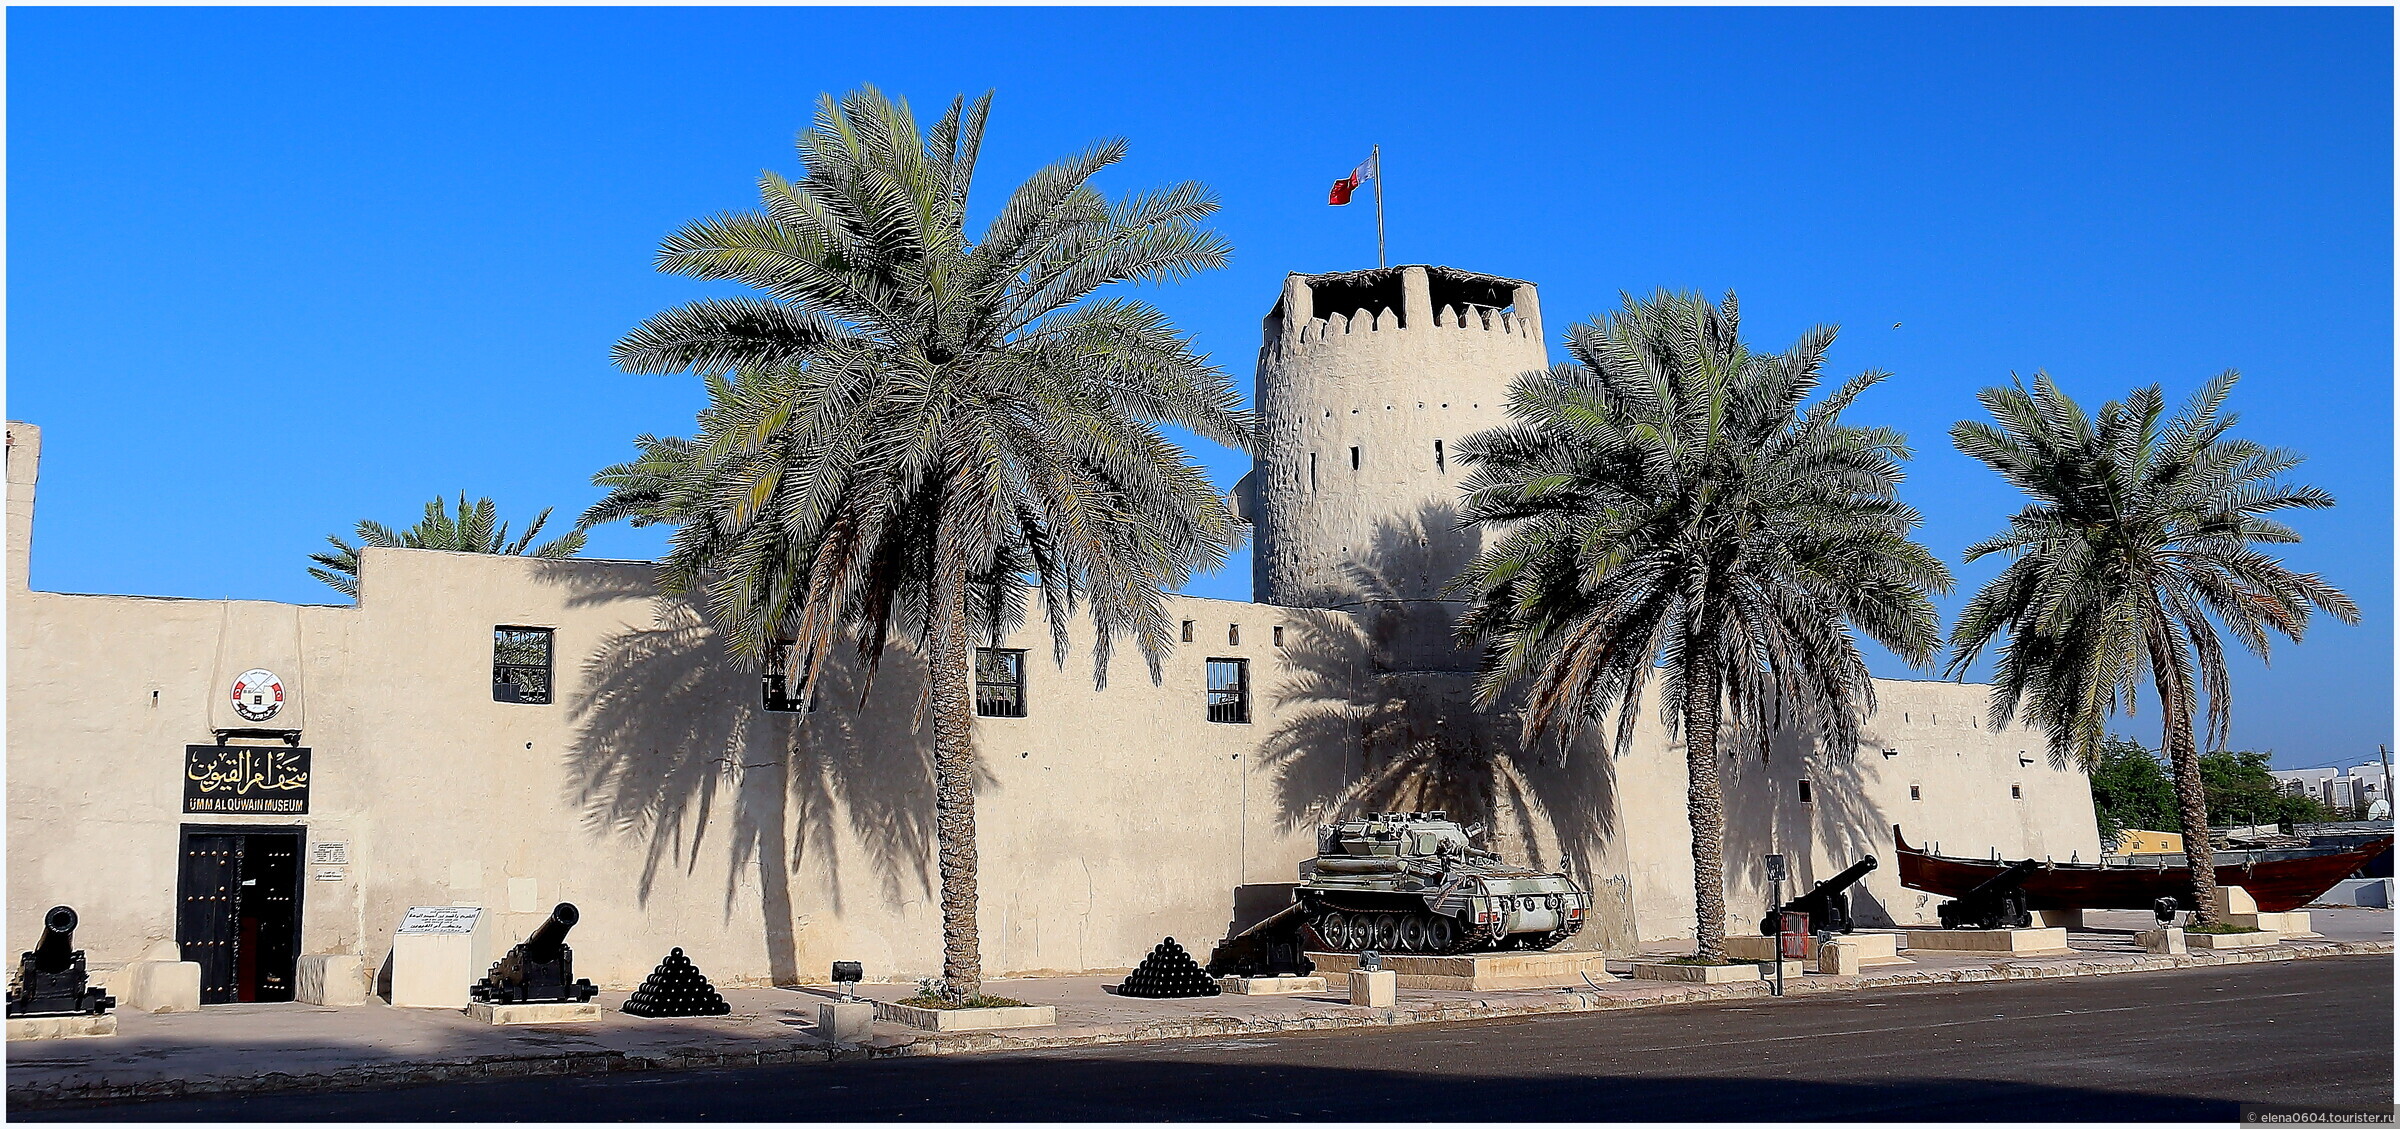 Аль кувейн погода. Умм-Аль-Кувейн (Umm al Quwain), ОАЭ. Ум Эль буаги Алжир. Умм-Эль-Кайвайн (город). Исторический музей Умм Аль Кувейна.